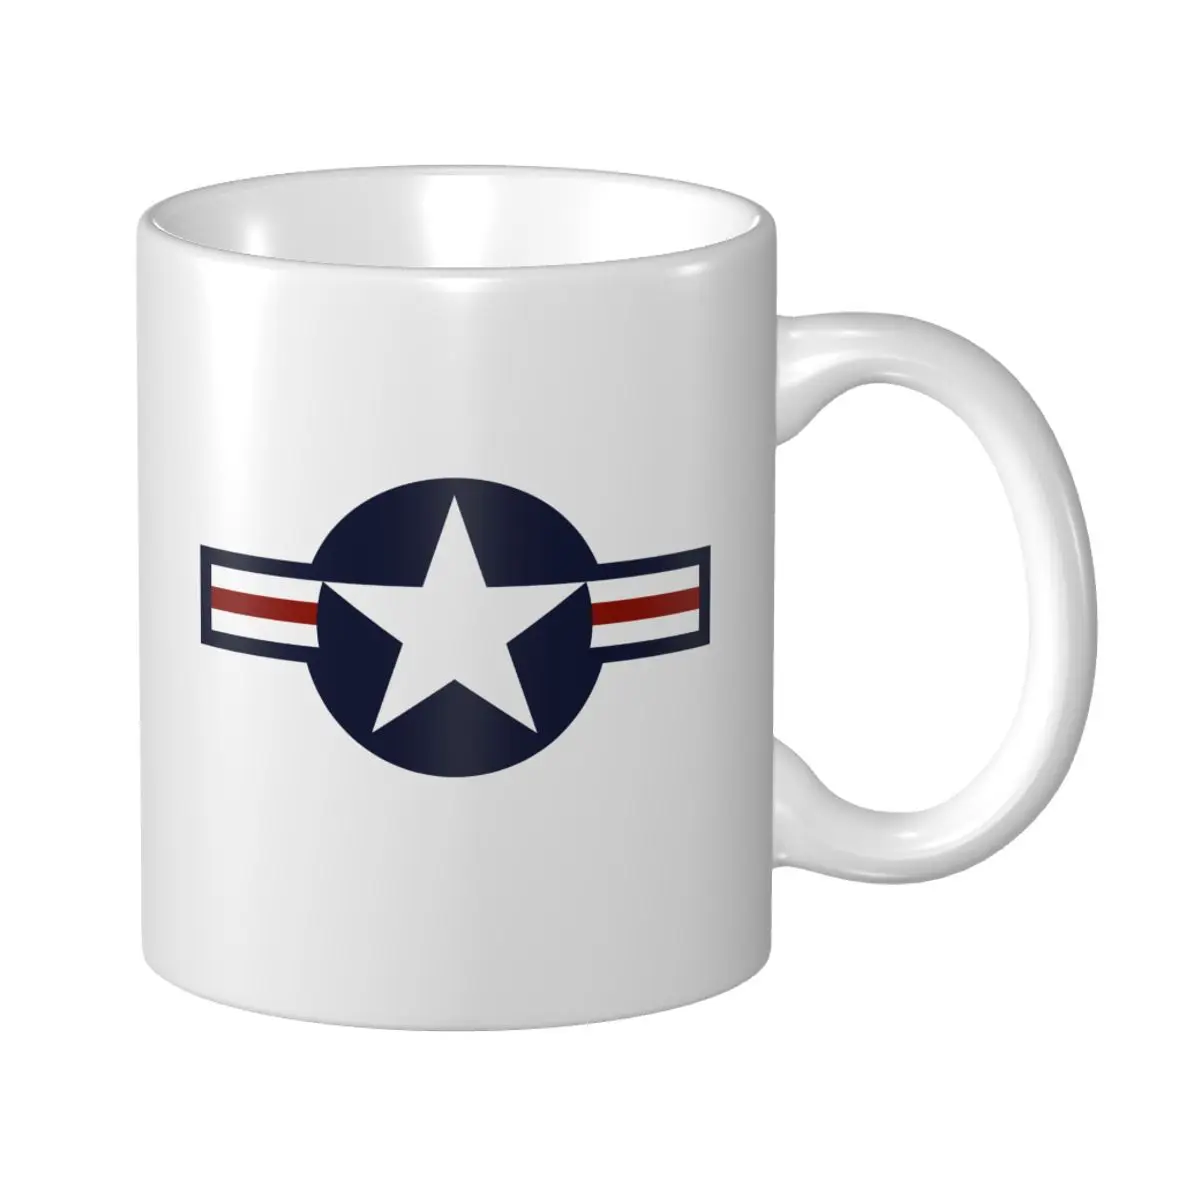 

United States Air Force Coffe Mug Solid color Mugs Personality Ceramic Mugs Eco Friendly Tea Cup 330ml (11oz)